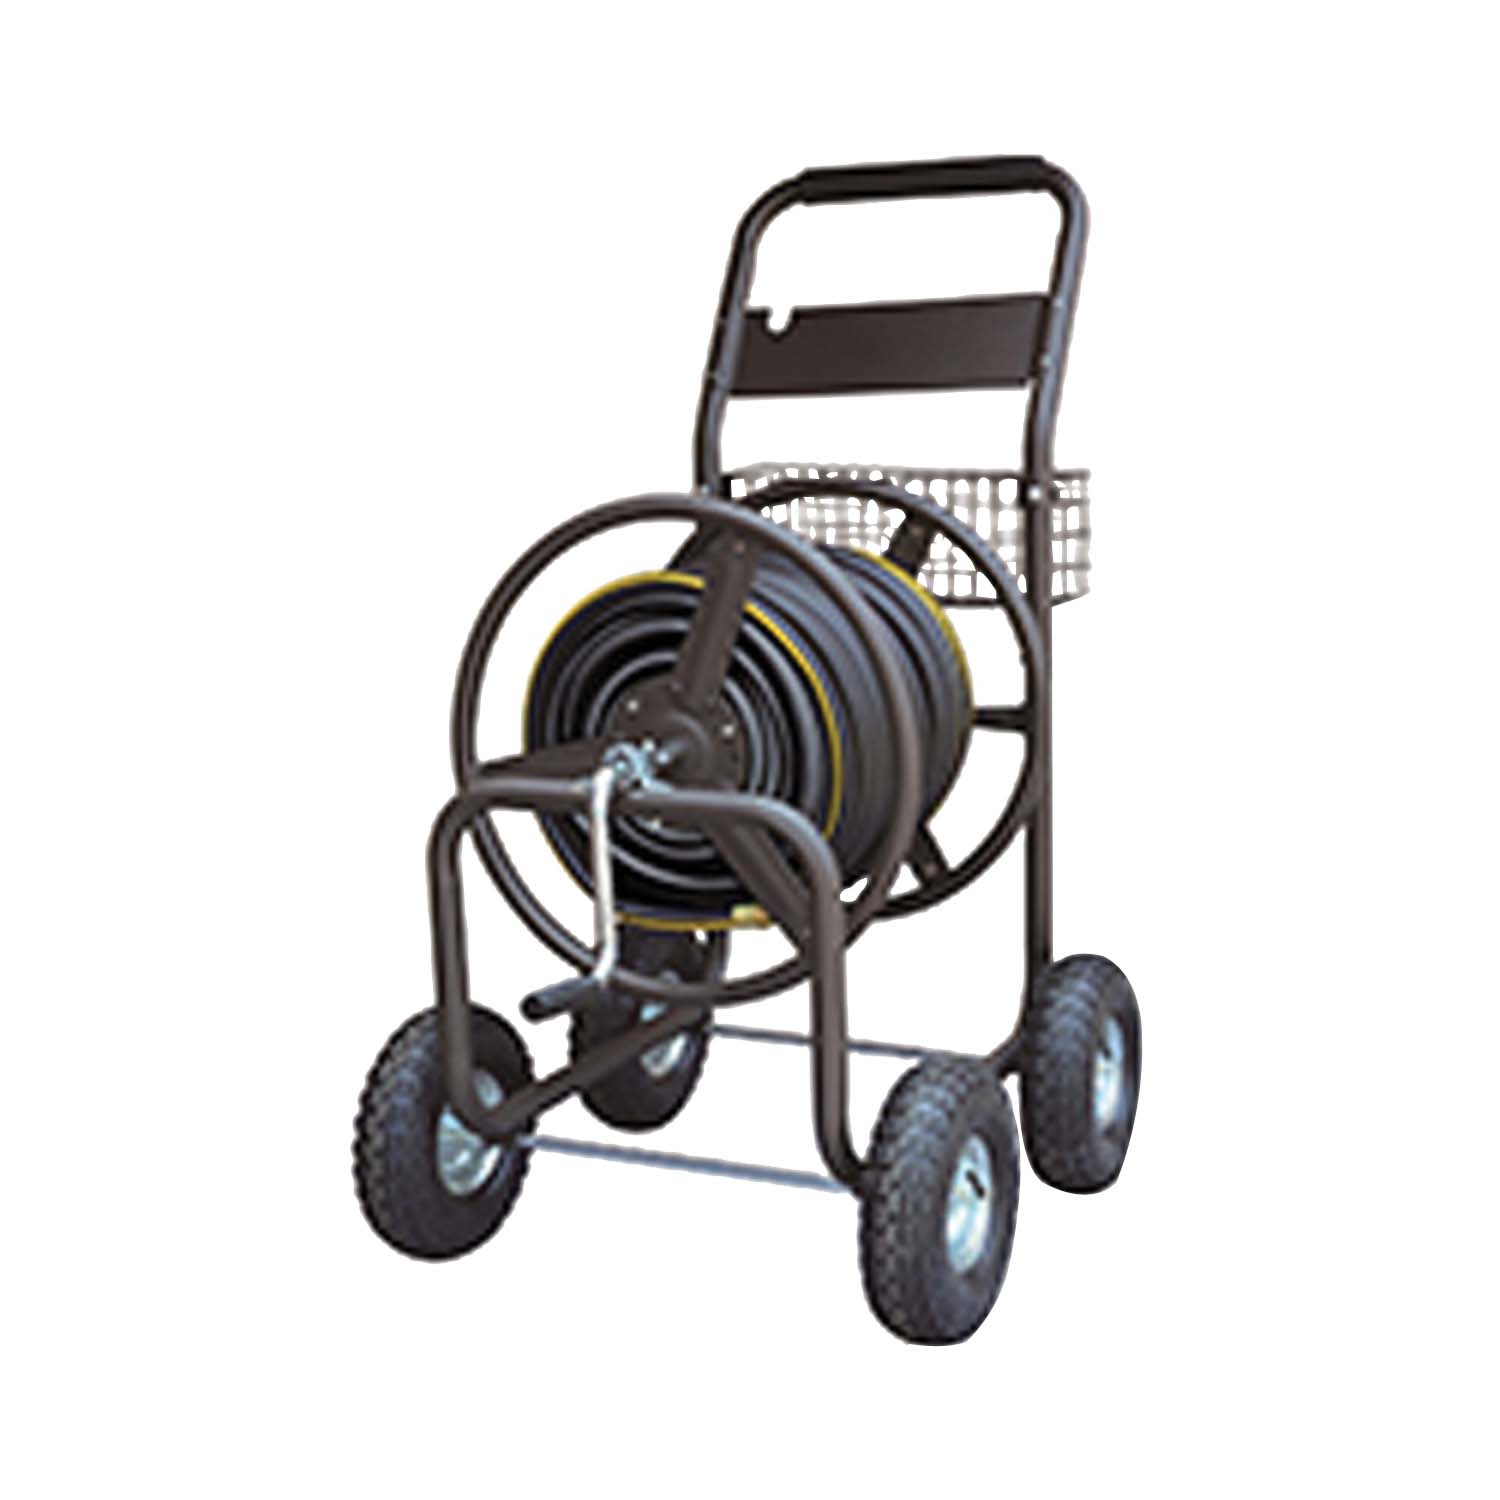 Landscapers Select TC4703 Hose Reel Cart, Steel - 1